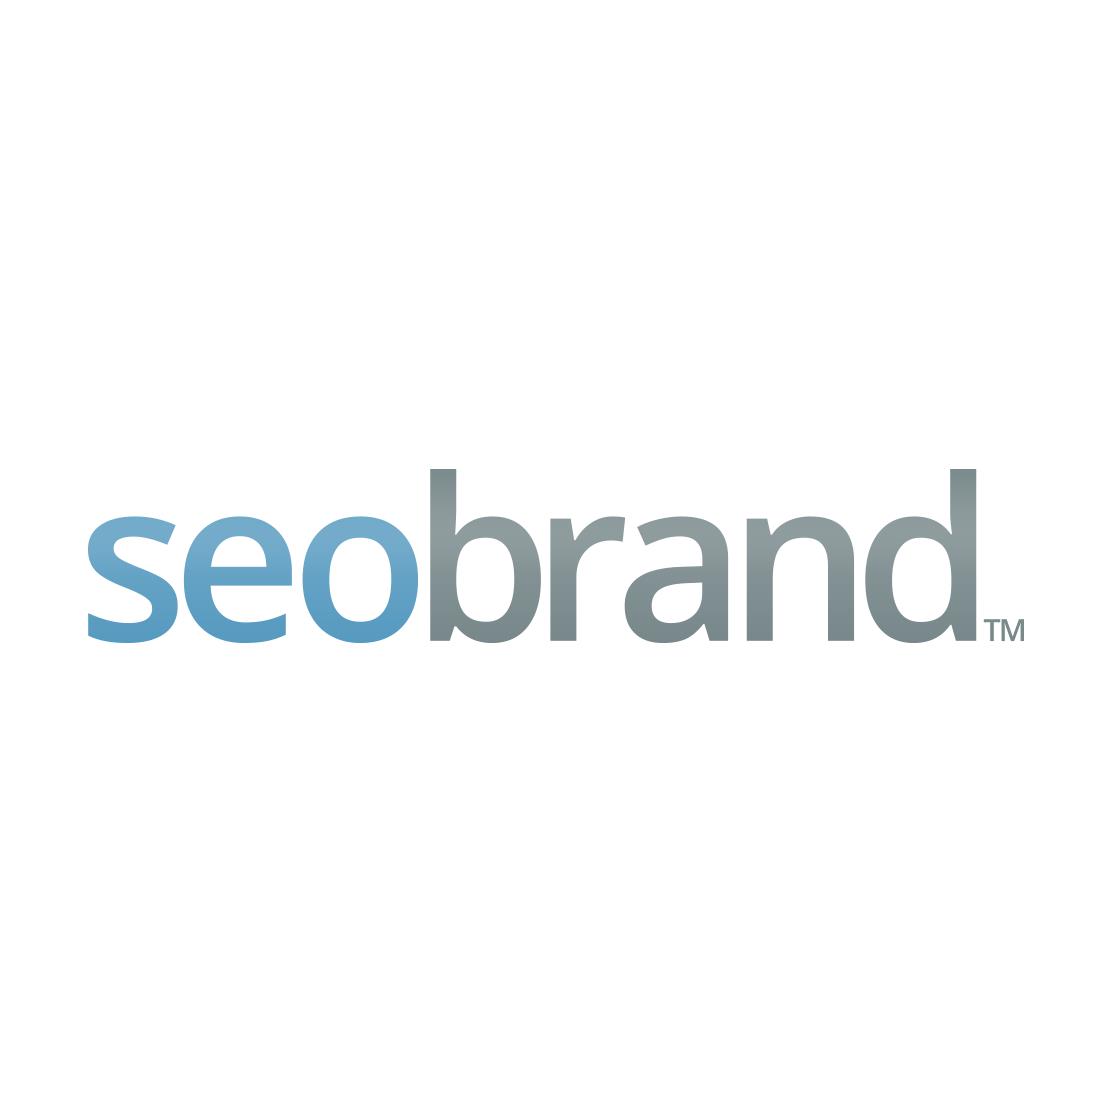 Best New York SEO Firm Logo: SEO Brand